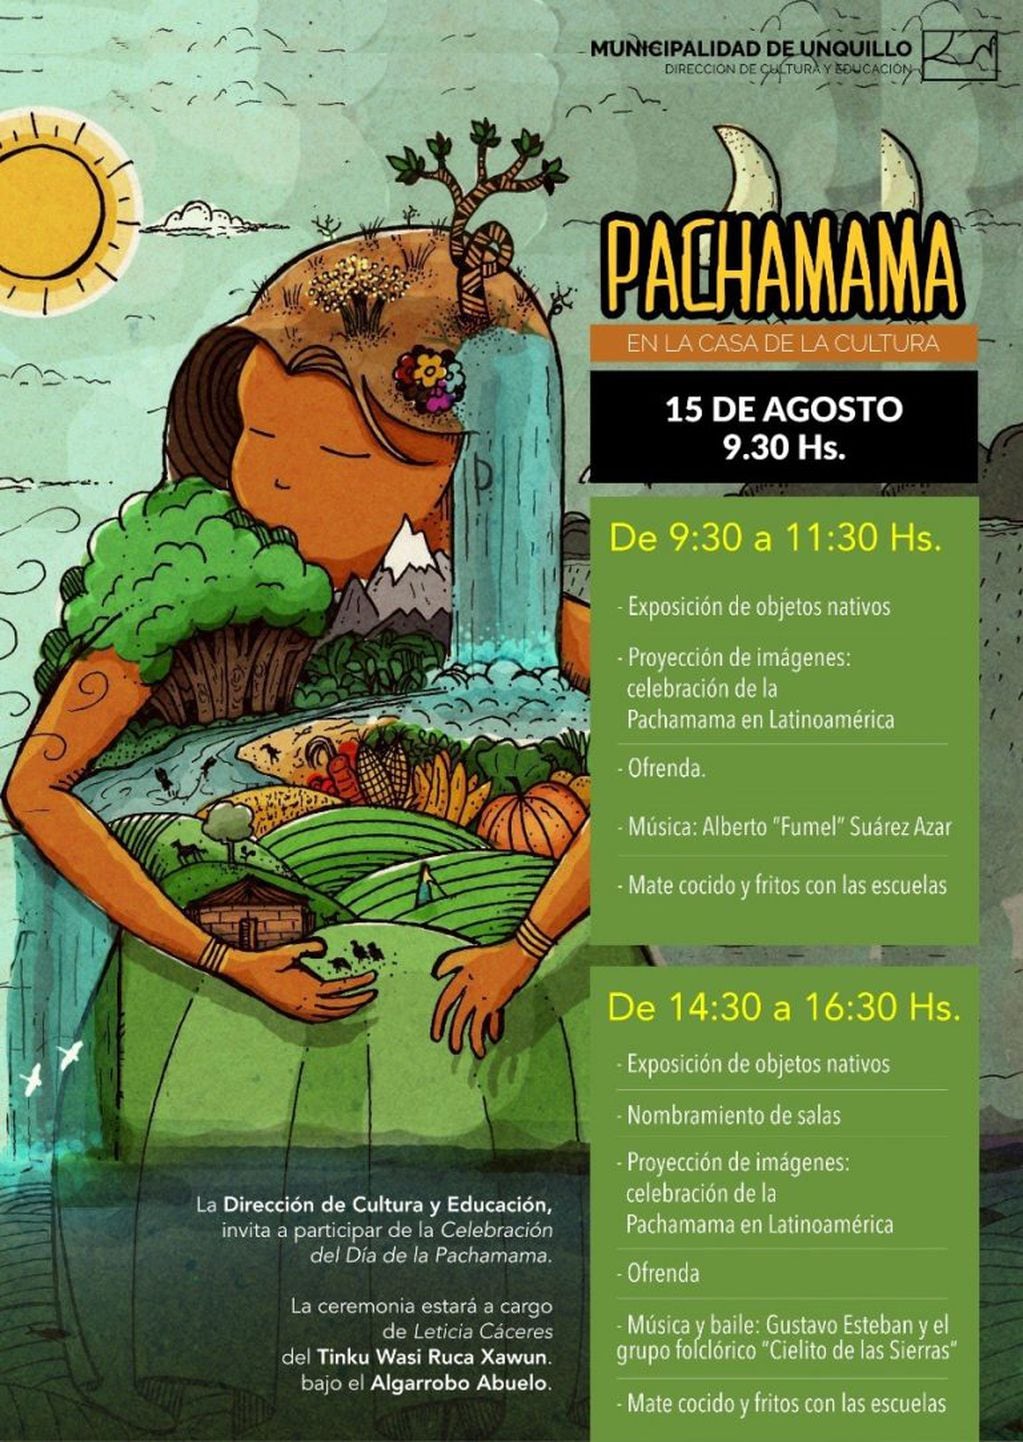 Fiesta de la Pachamama